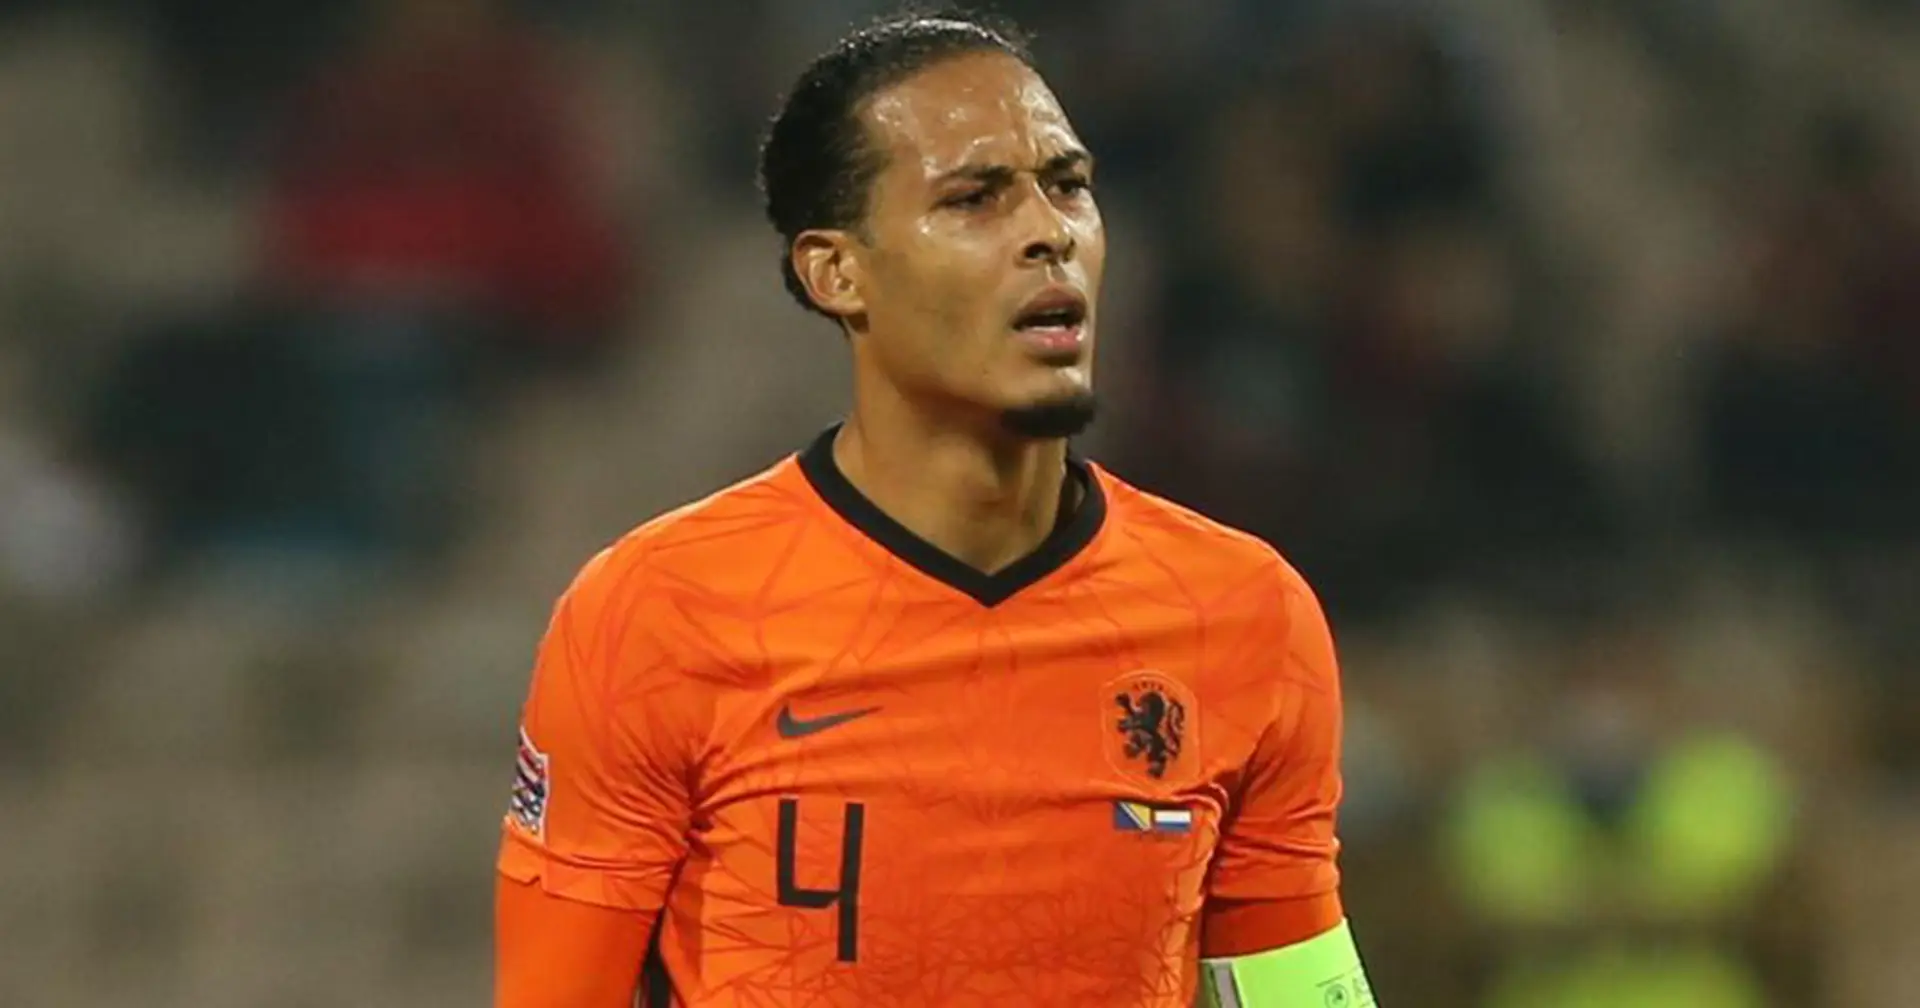 Van Dijk deployed as striker in Netherlands fixture - should Klopp make a note?